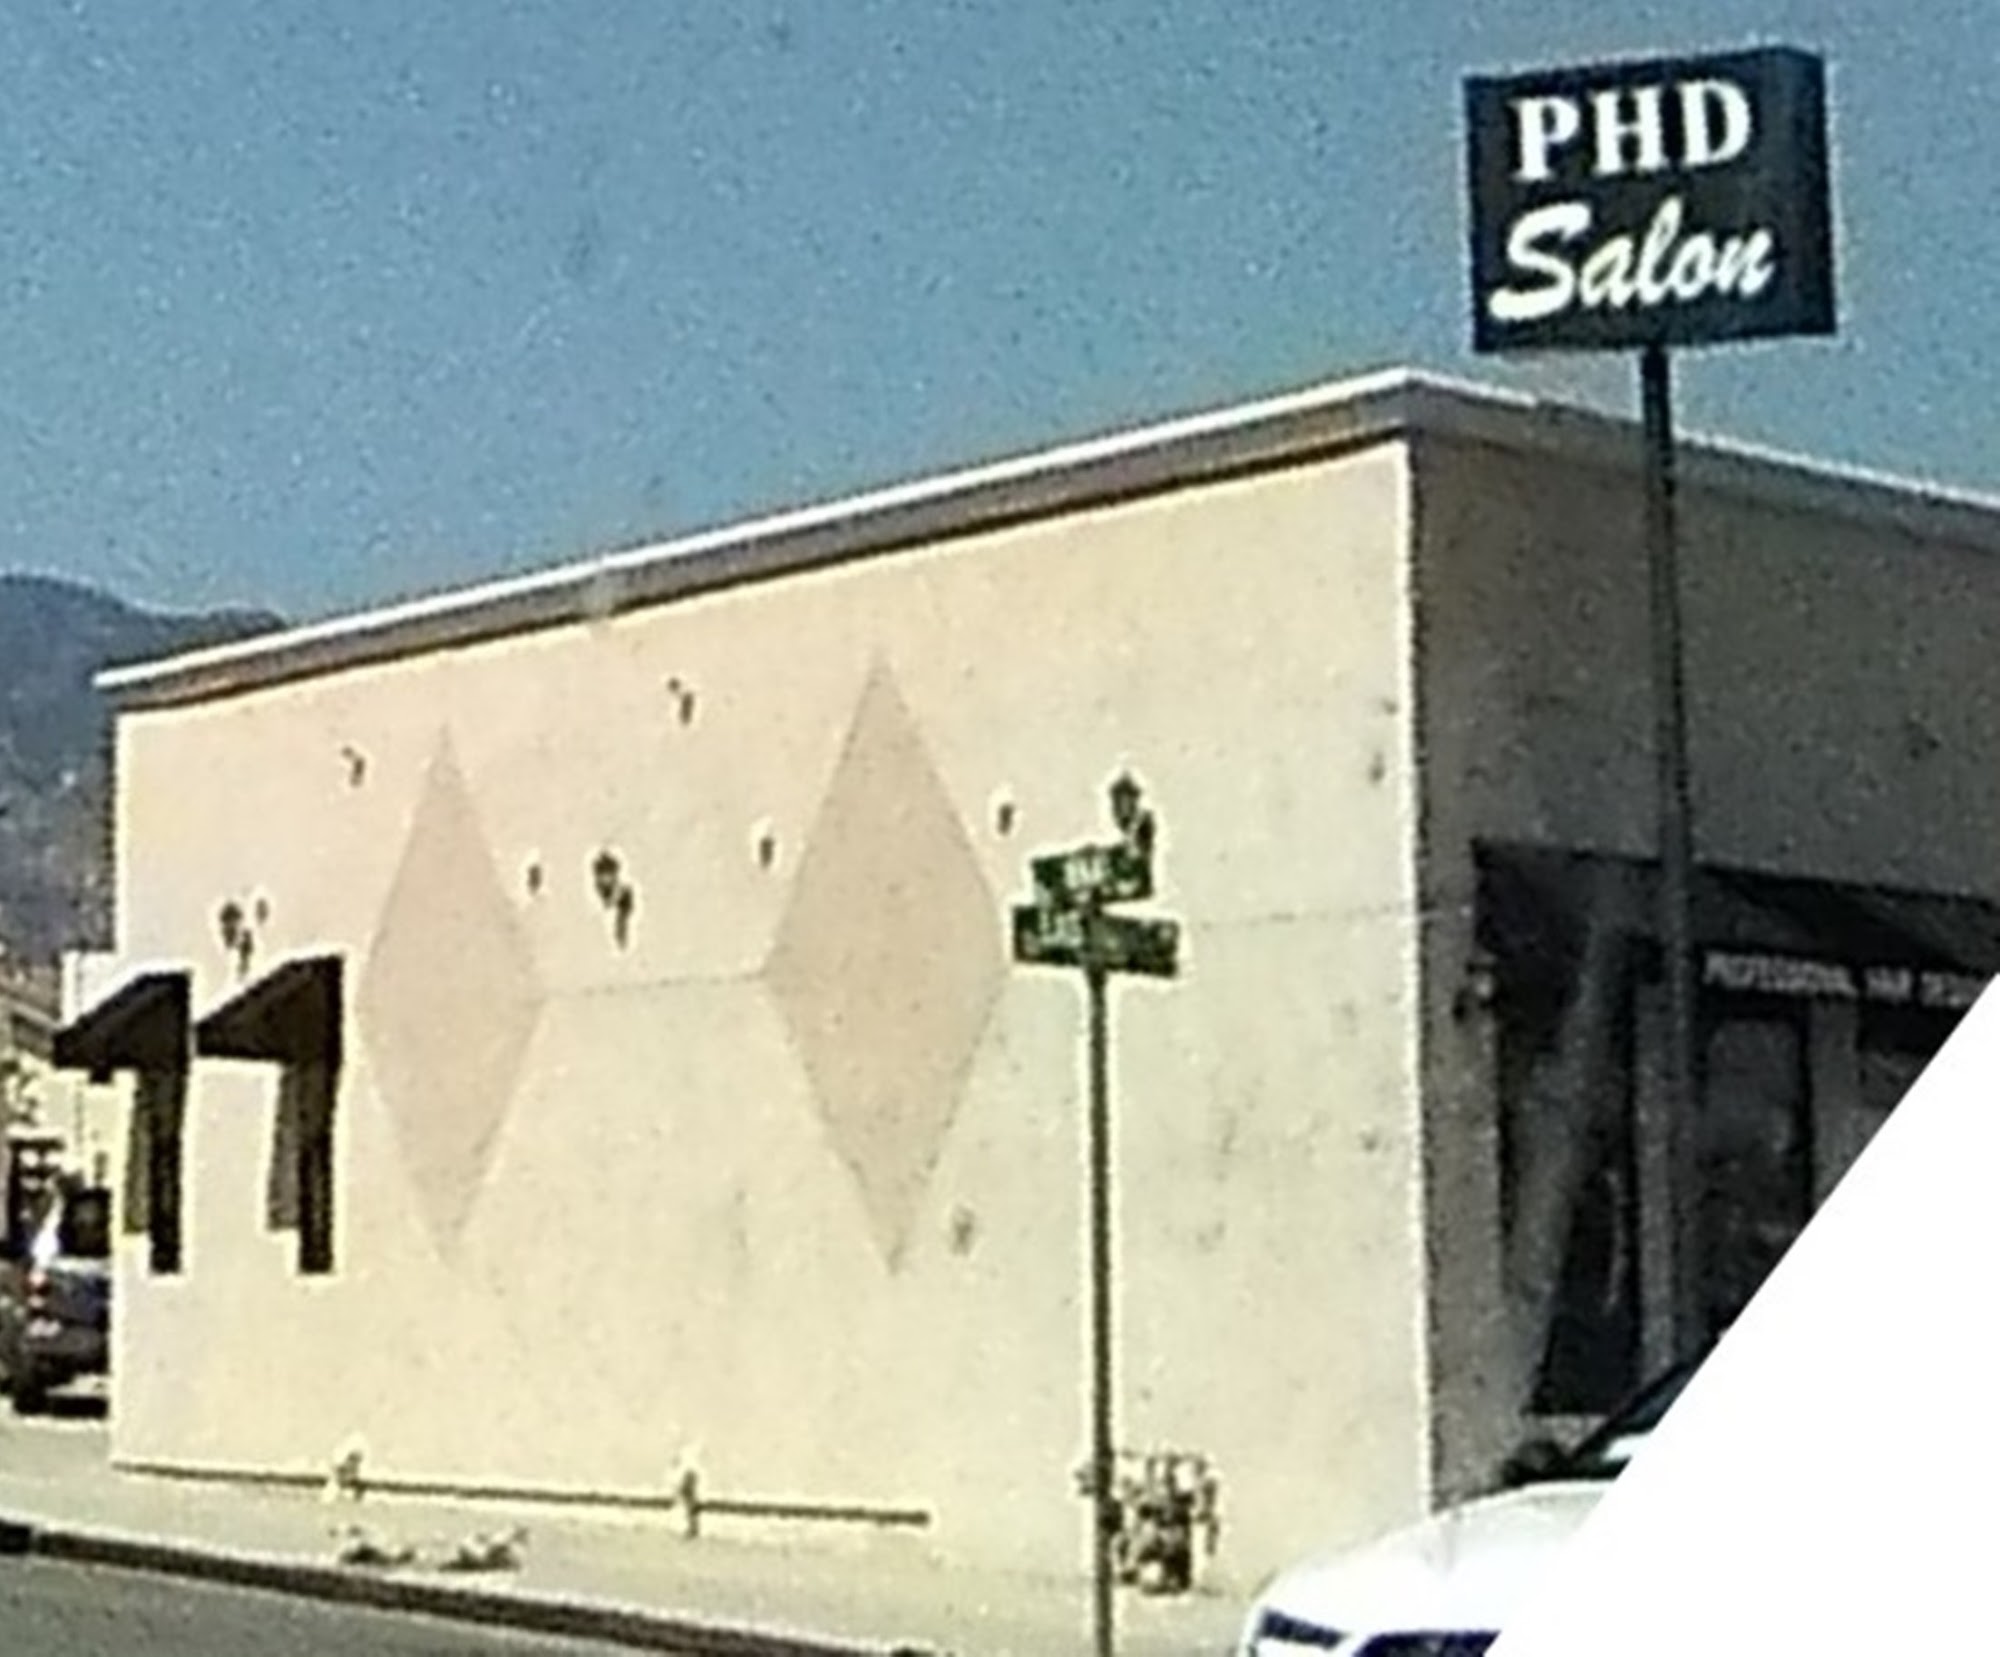 PHD Salon